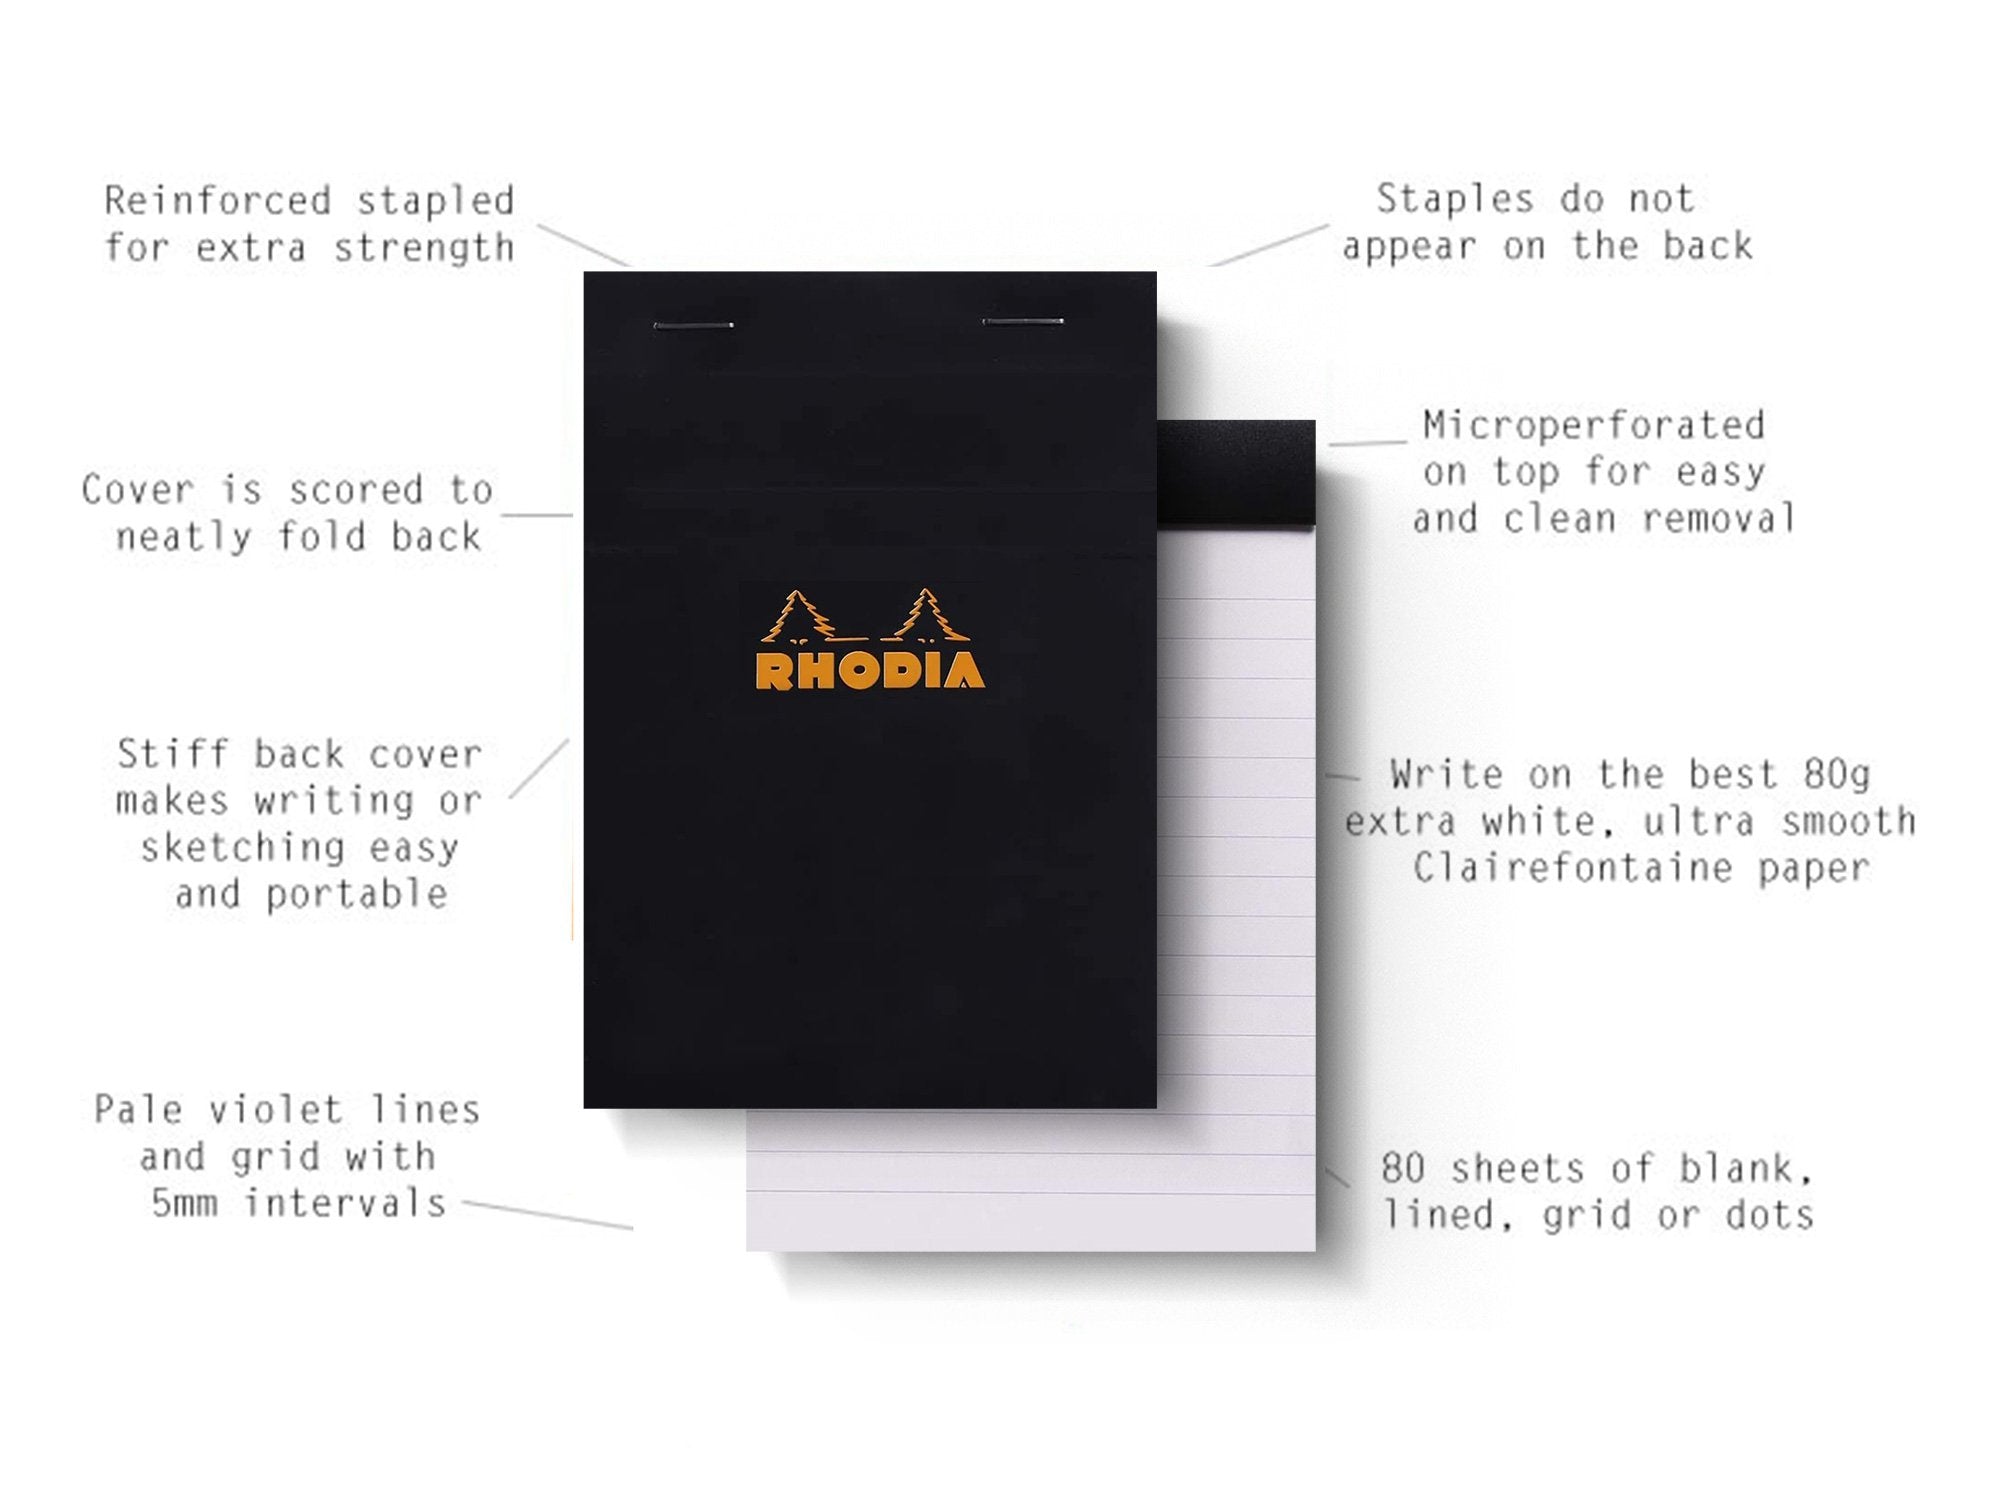 Rhodia Top Staple Bound No. 16 Notepad (6 x 8.25)